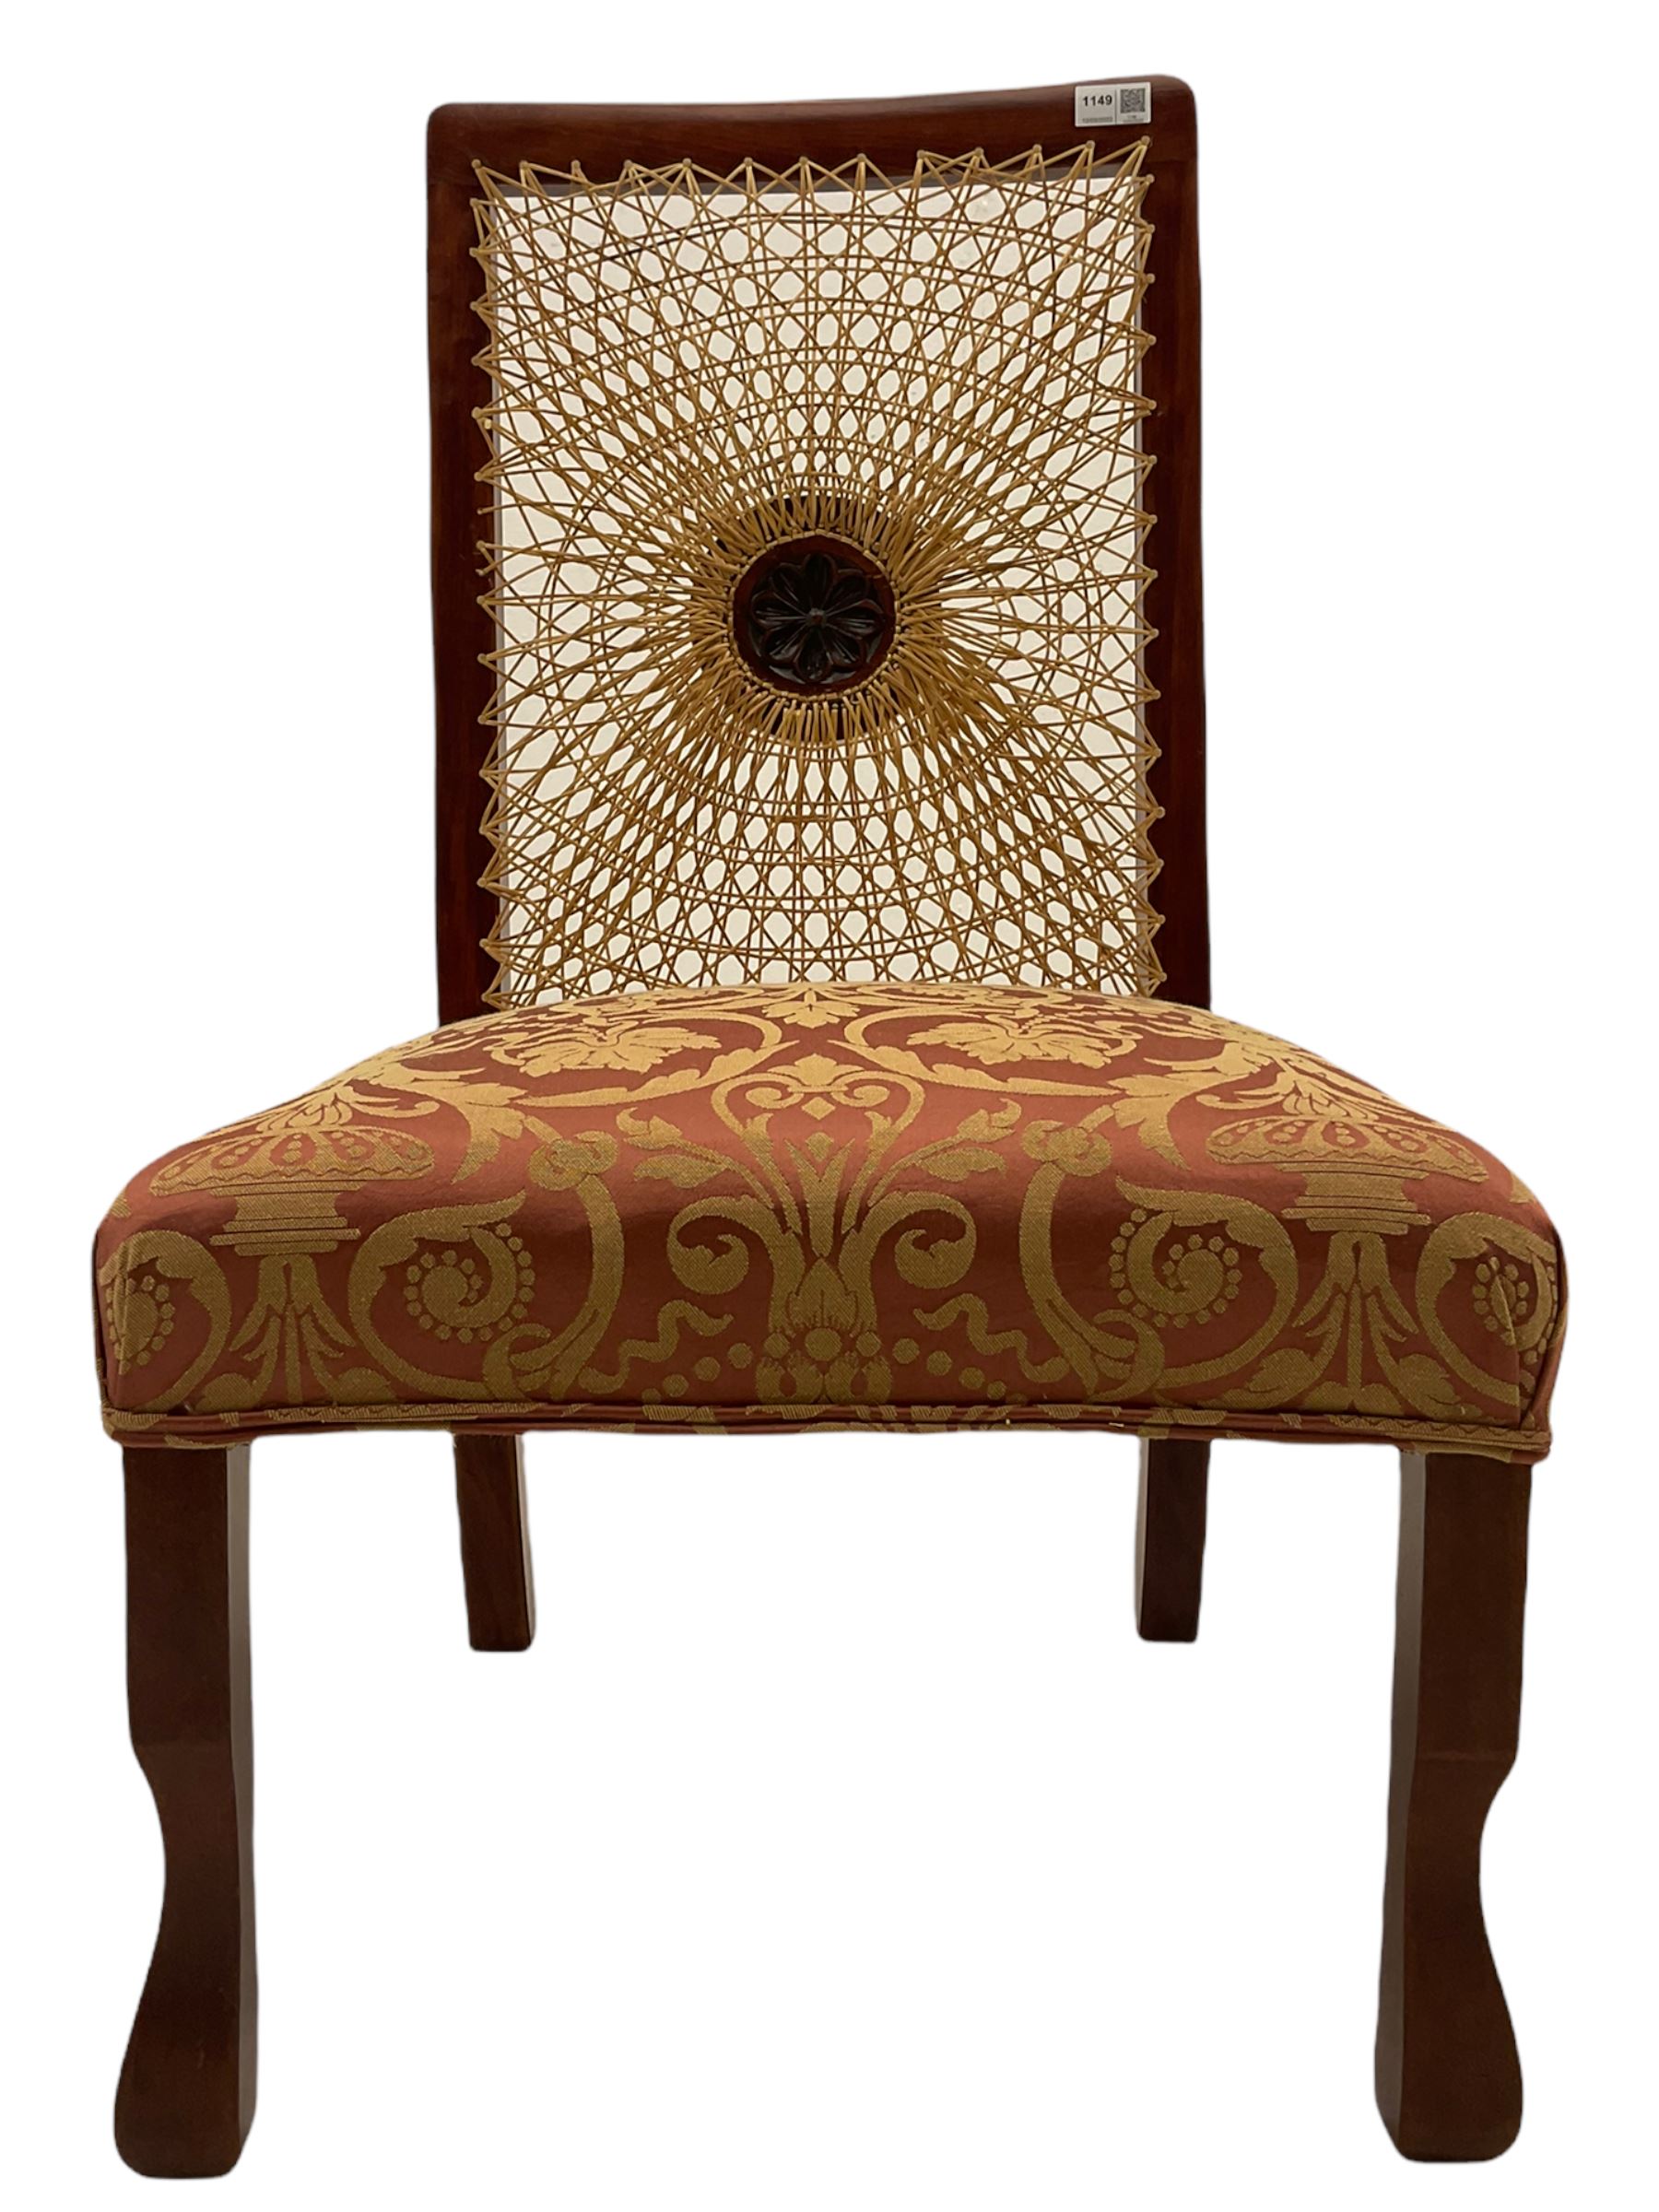 Early 20th century walnut framed bedroom chair